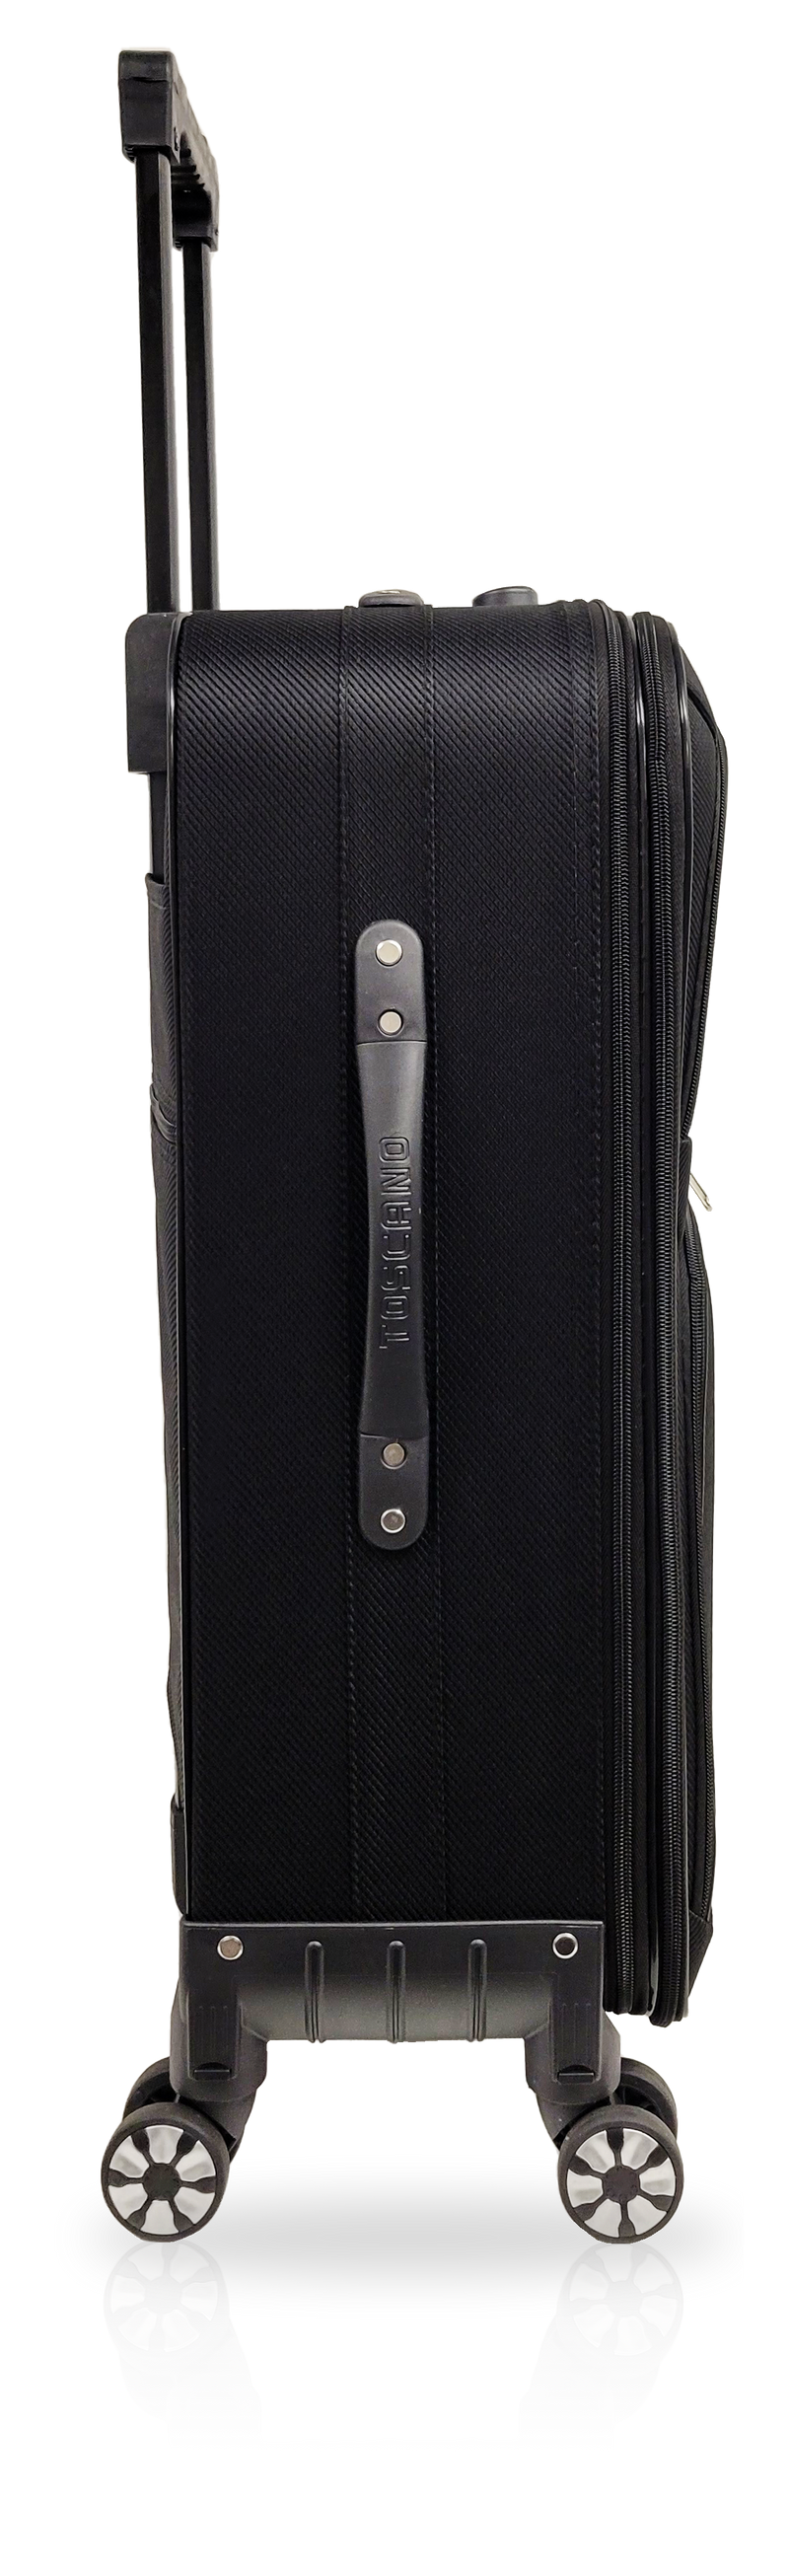 TOSCANO Crociato  29-inch Lightweight Luggage Suitcase